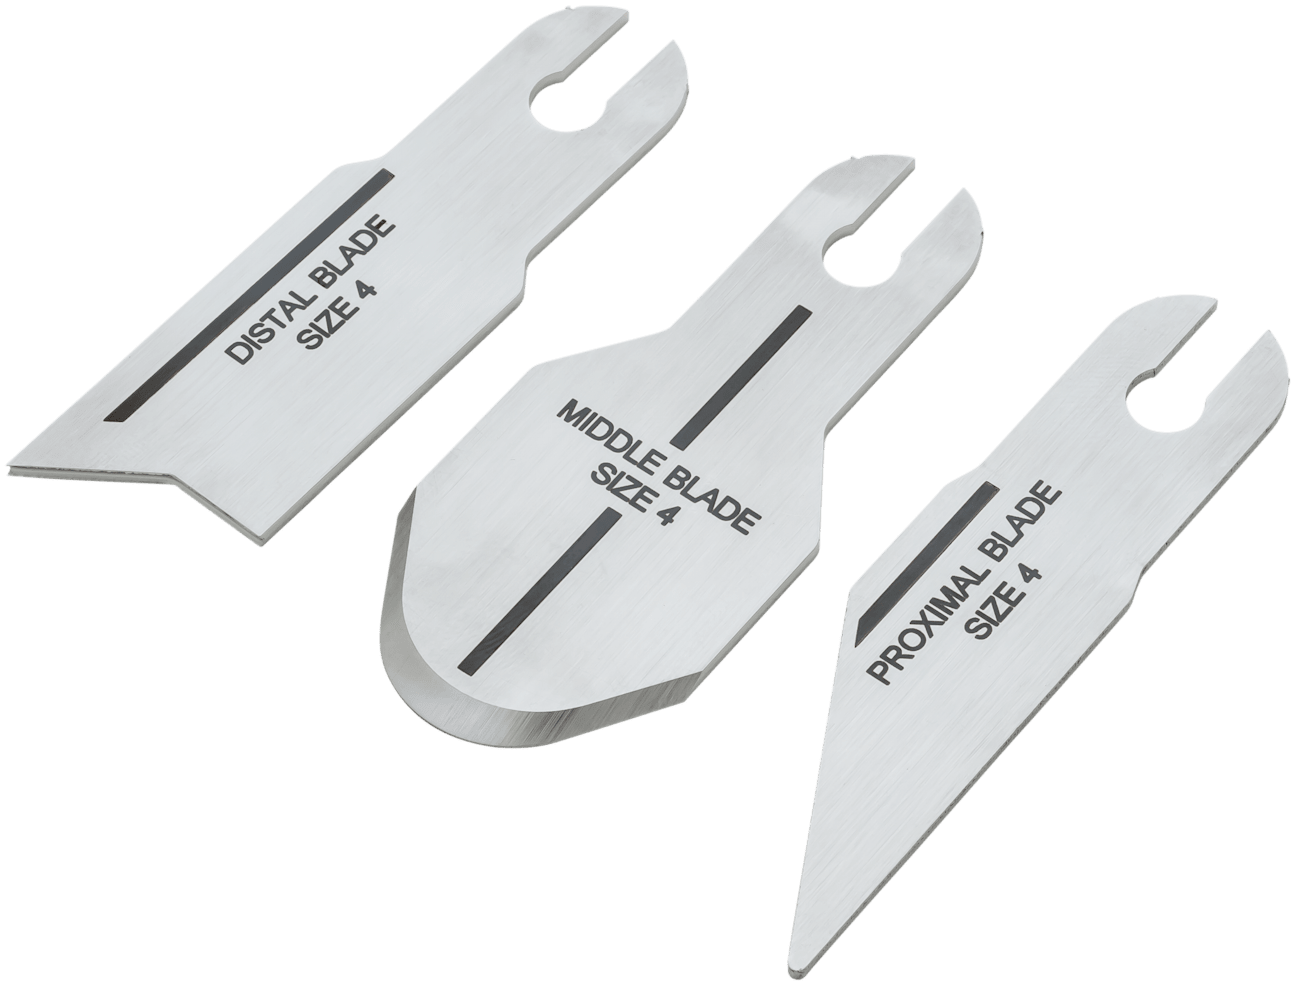 iBalance PFJ Blade Kit, Size 4